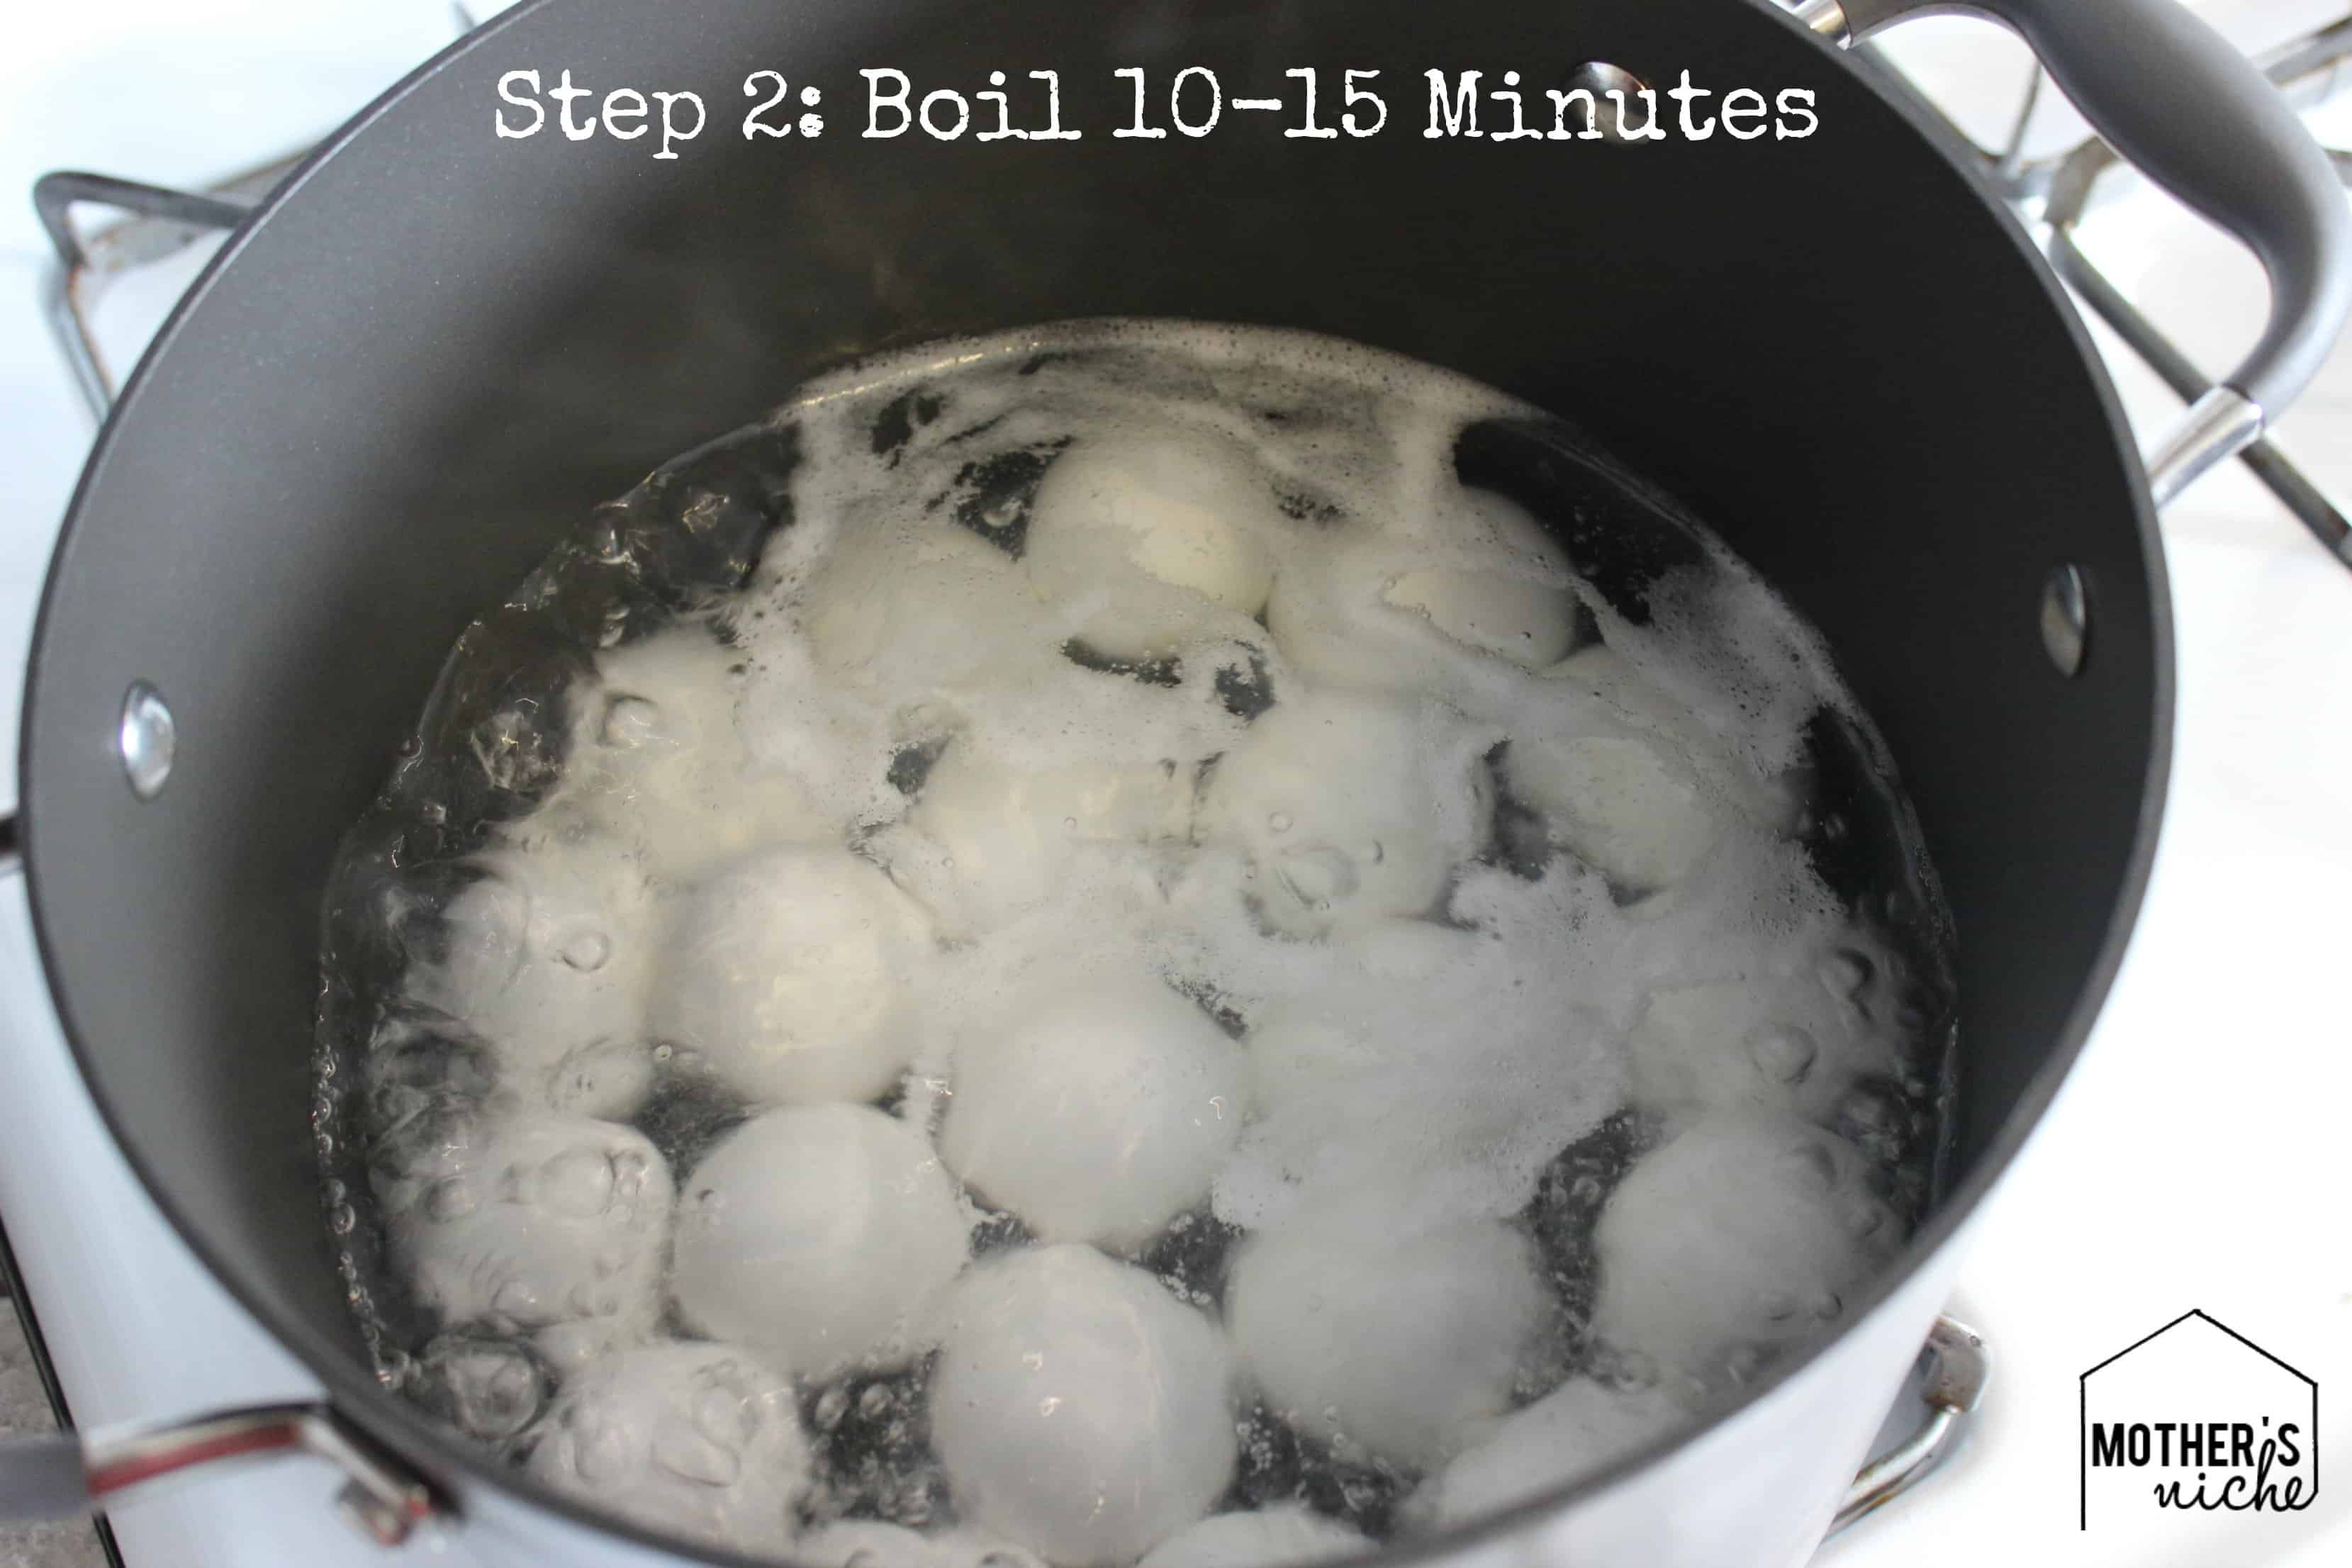 Easy-to-peel hard boiled eggs